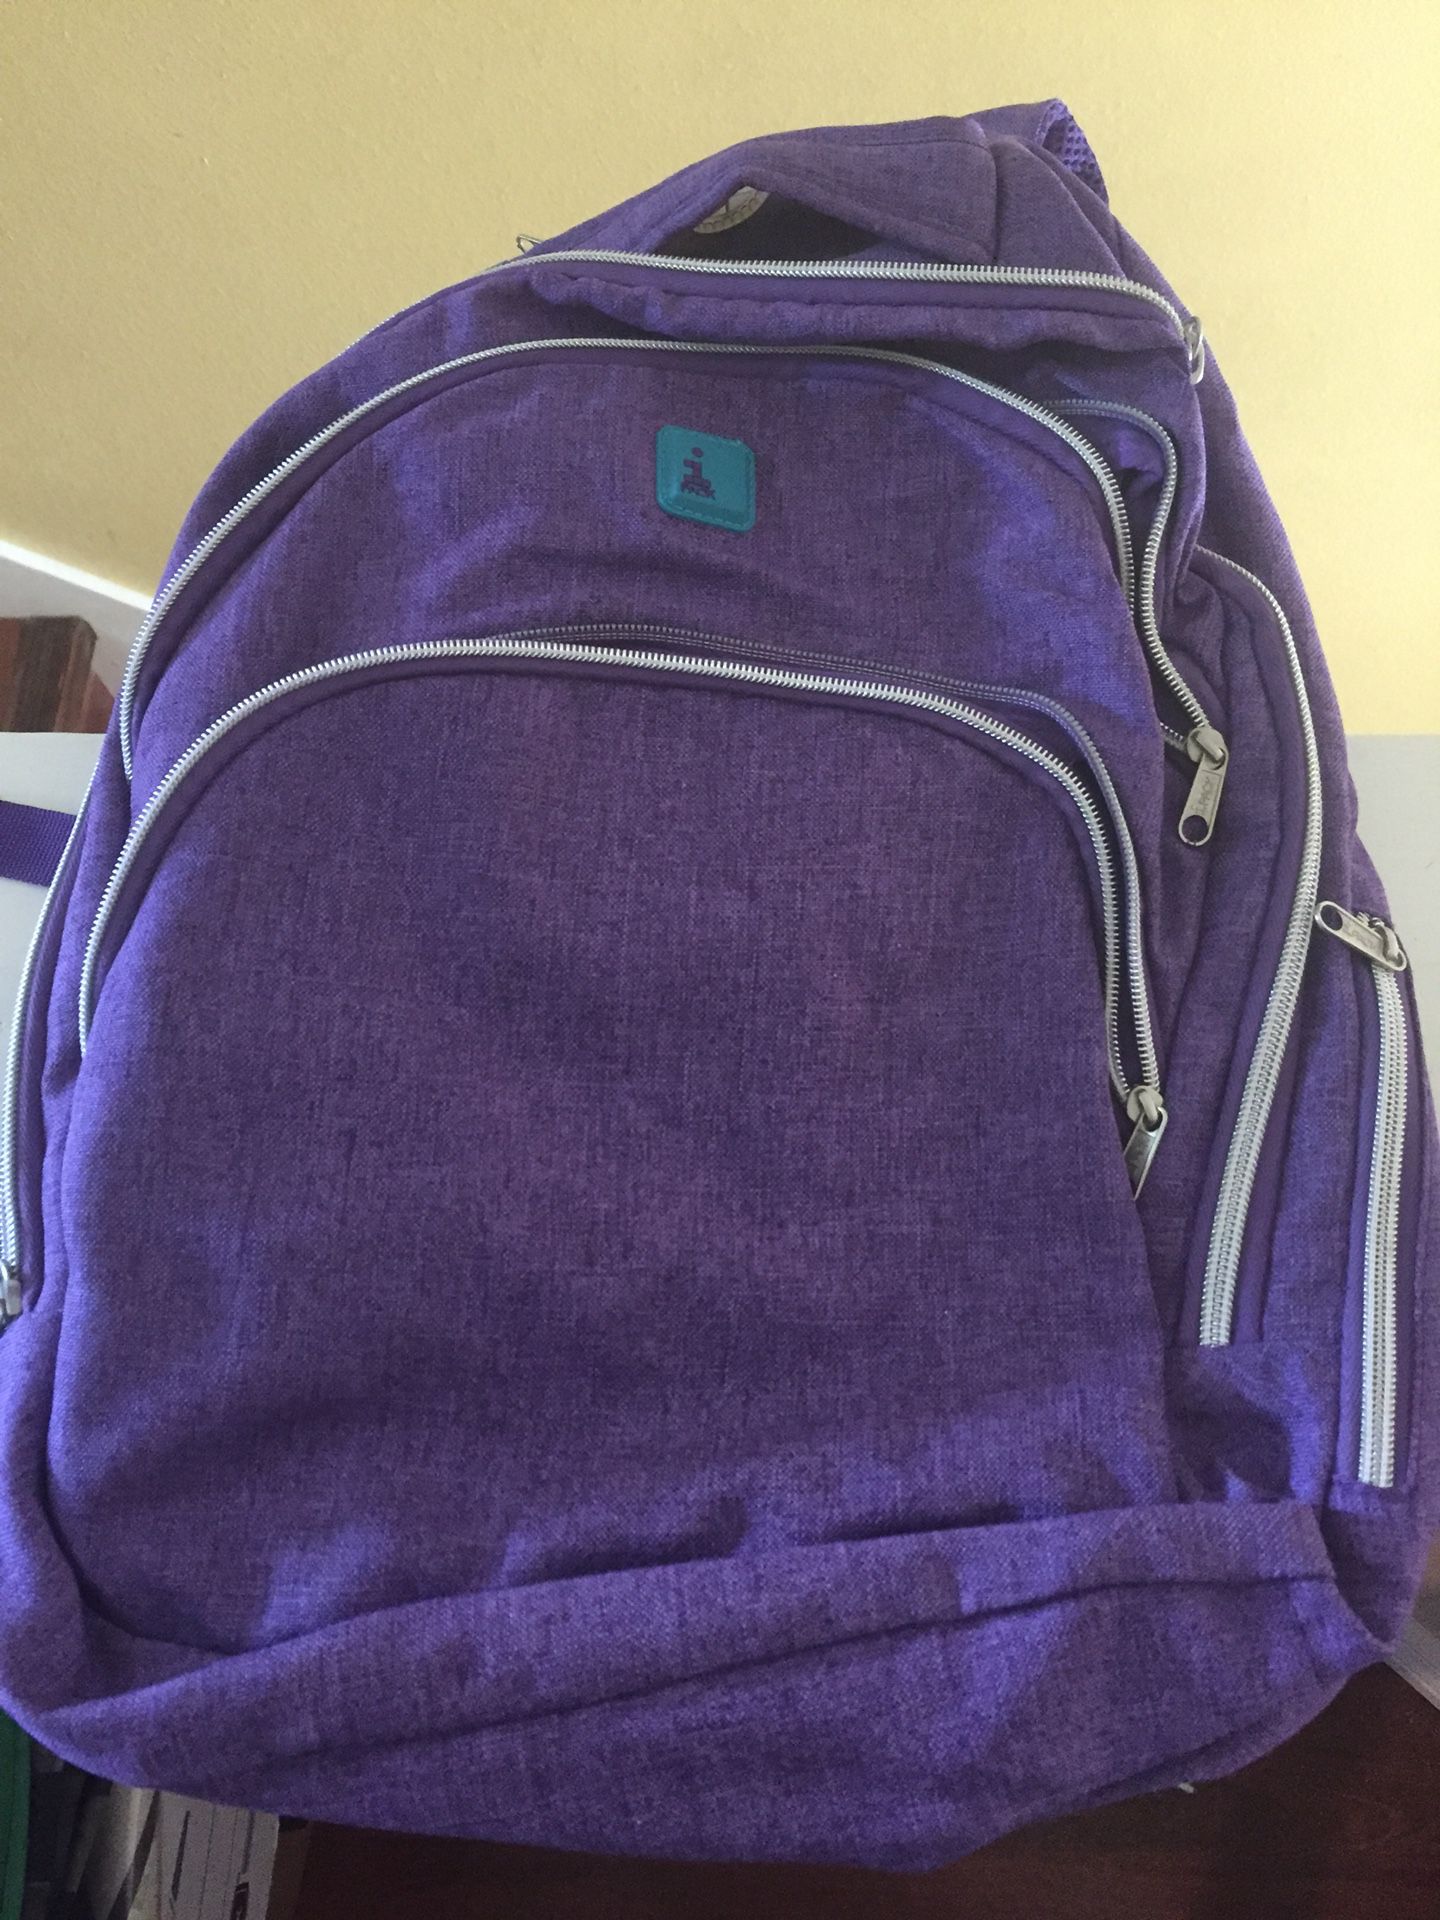 Purple laptop backpack